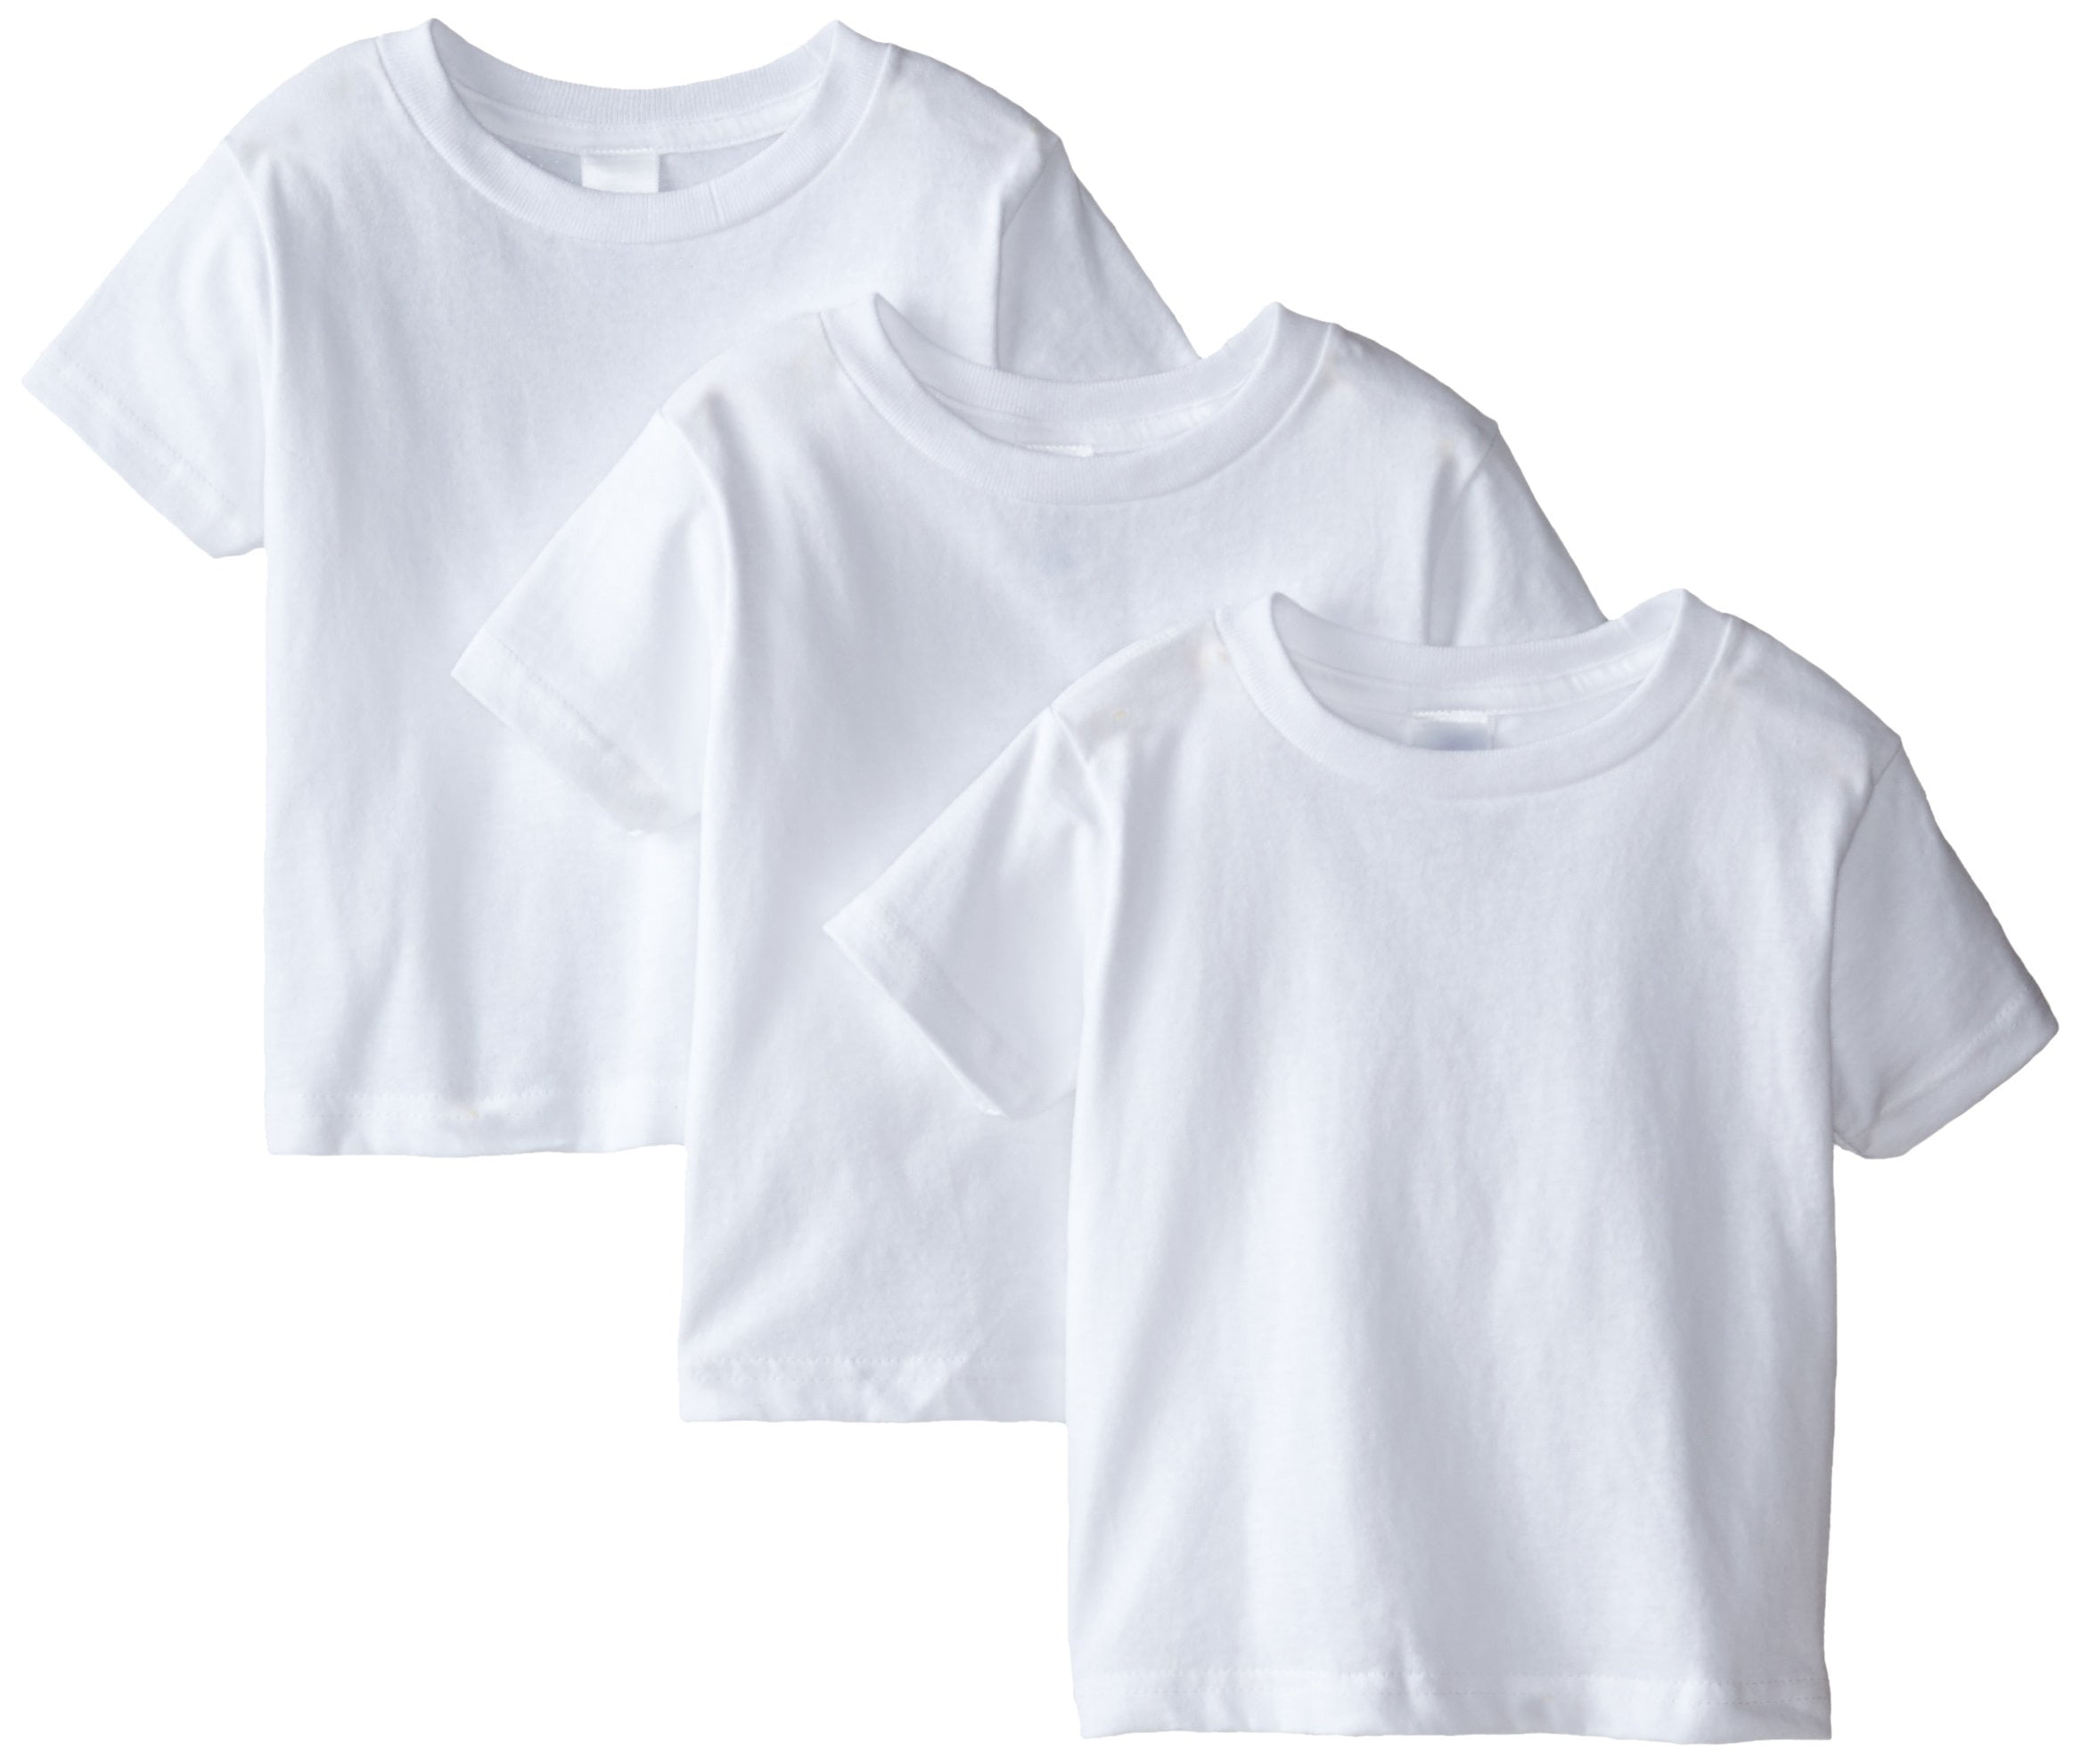 Clementine Baby-Girls Infant Soft Cotton Jersey Tees Short Sleeve Crewneck T-Shirt